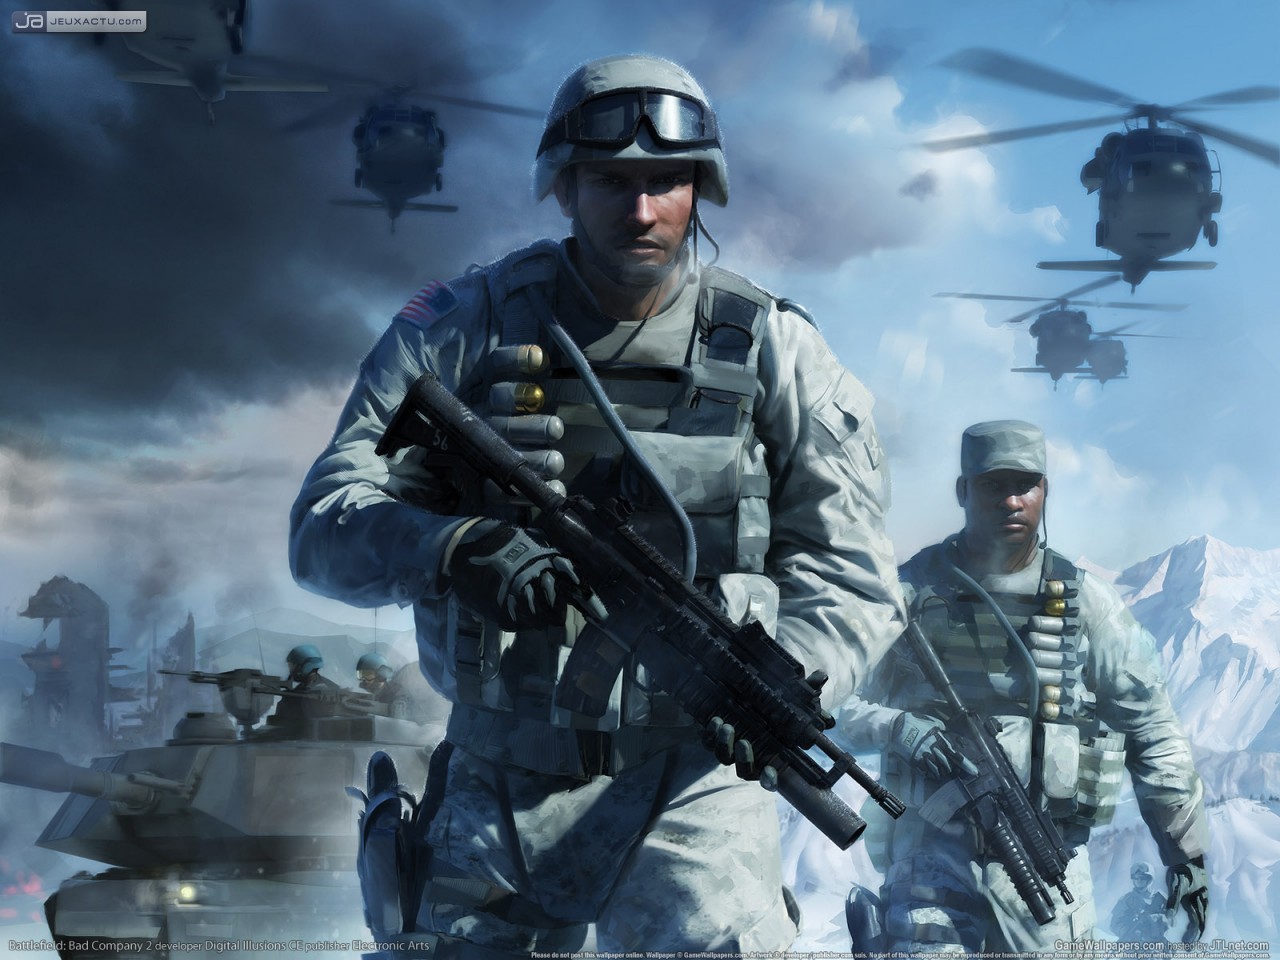 Battlefield : Bad Company 2 explose